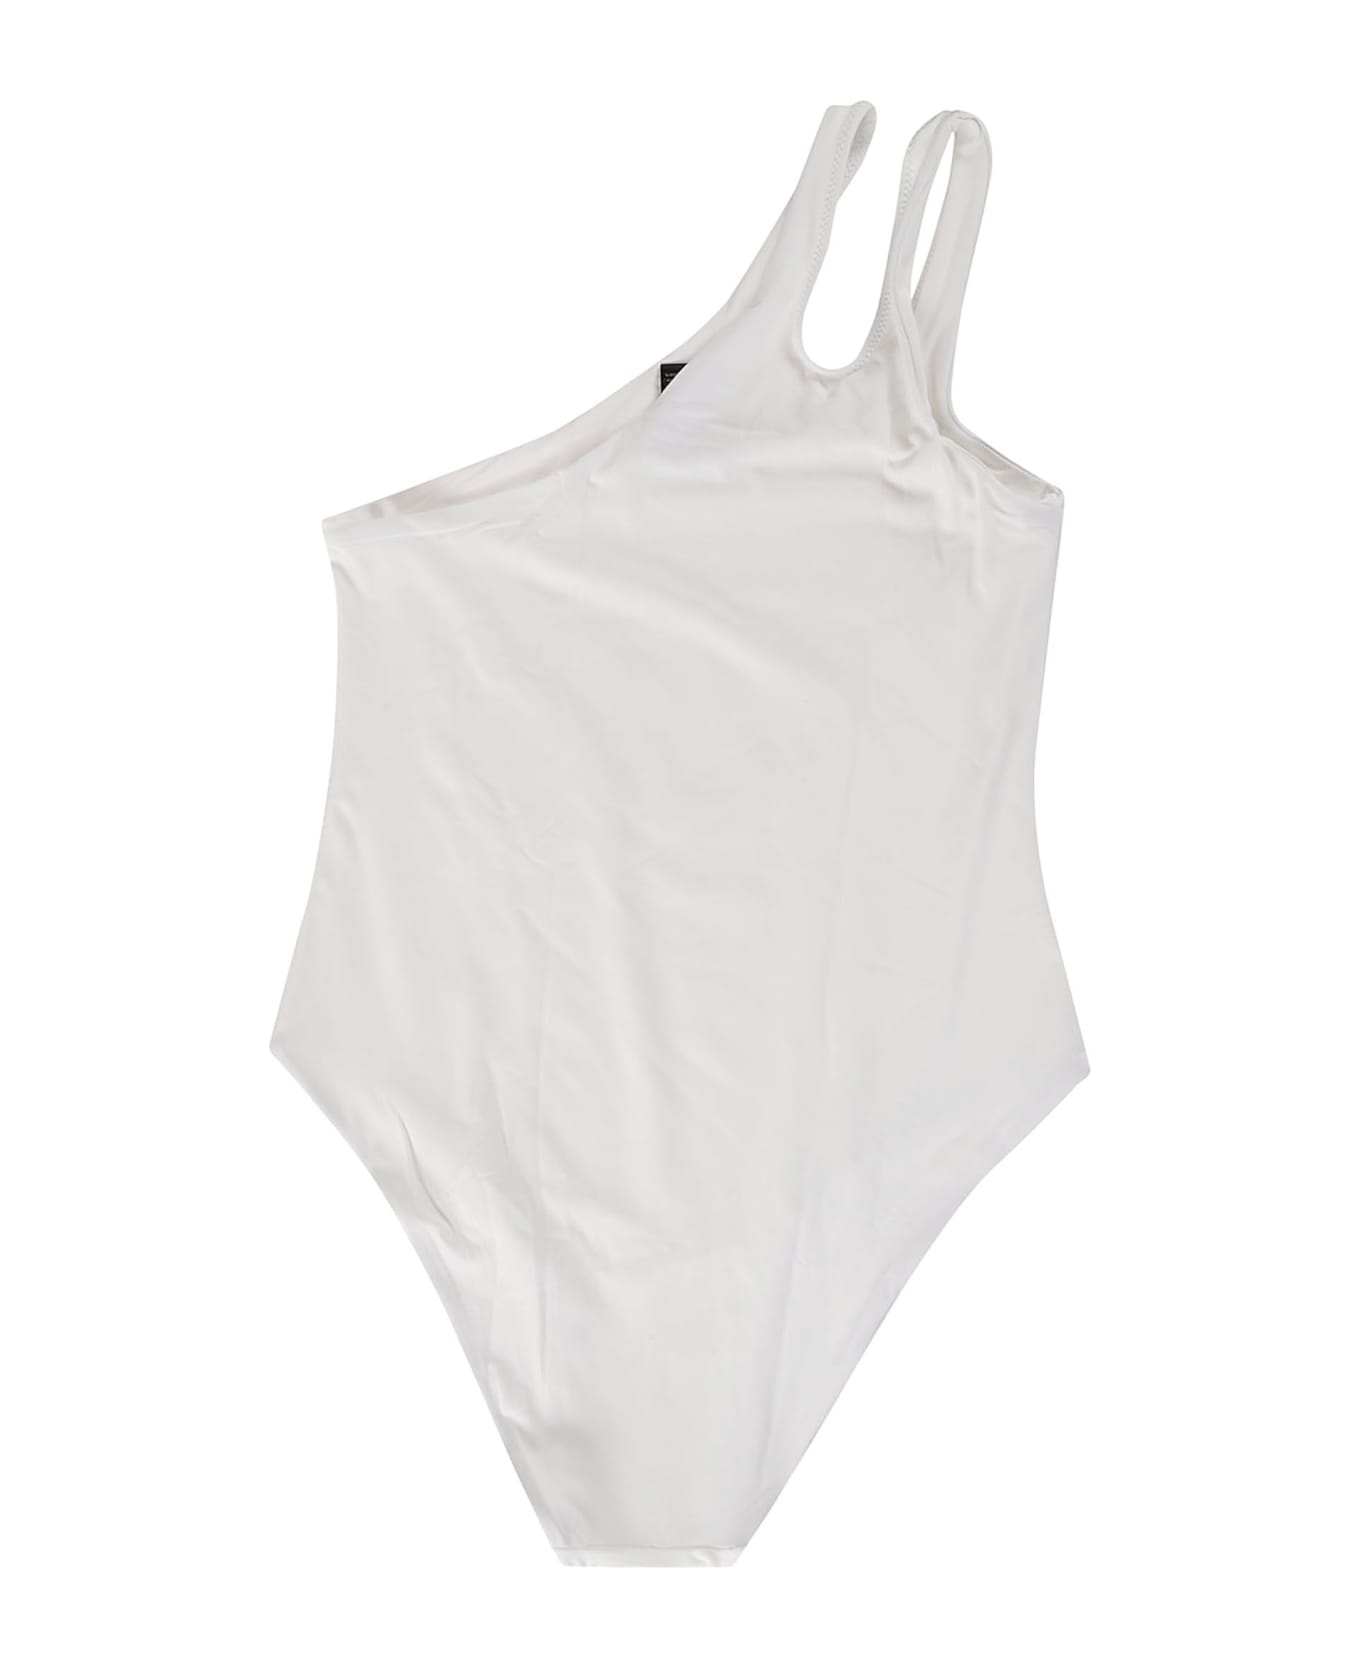 Federica Tosi Slim Fit Plain Swimsuit - White ワンピース